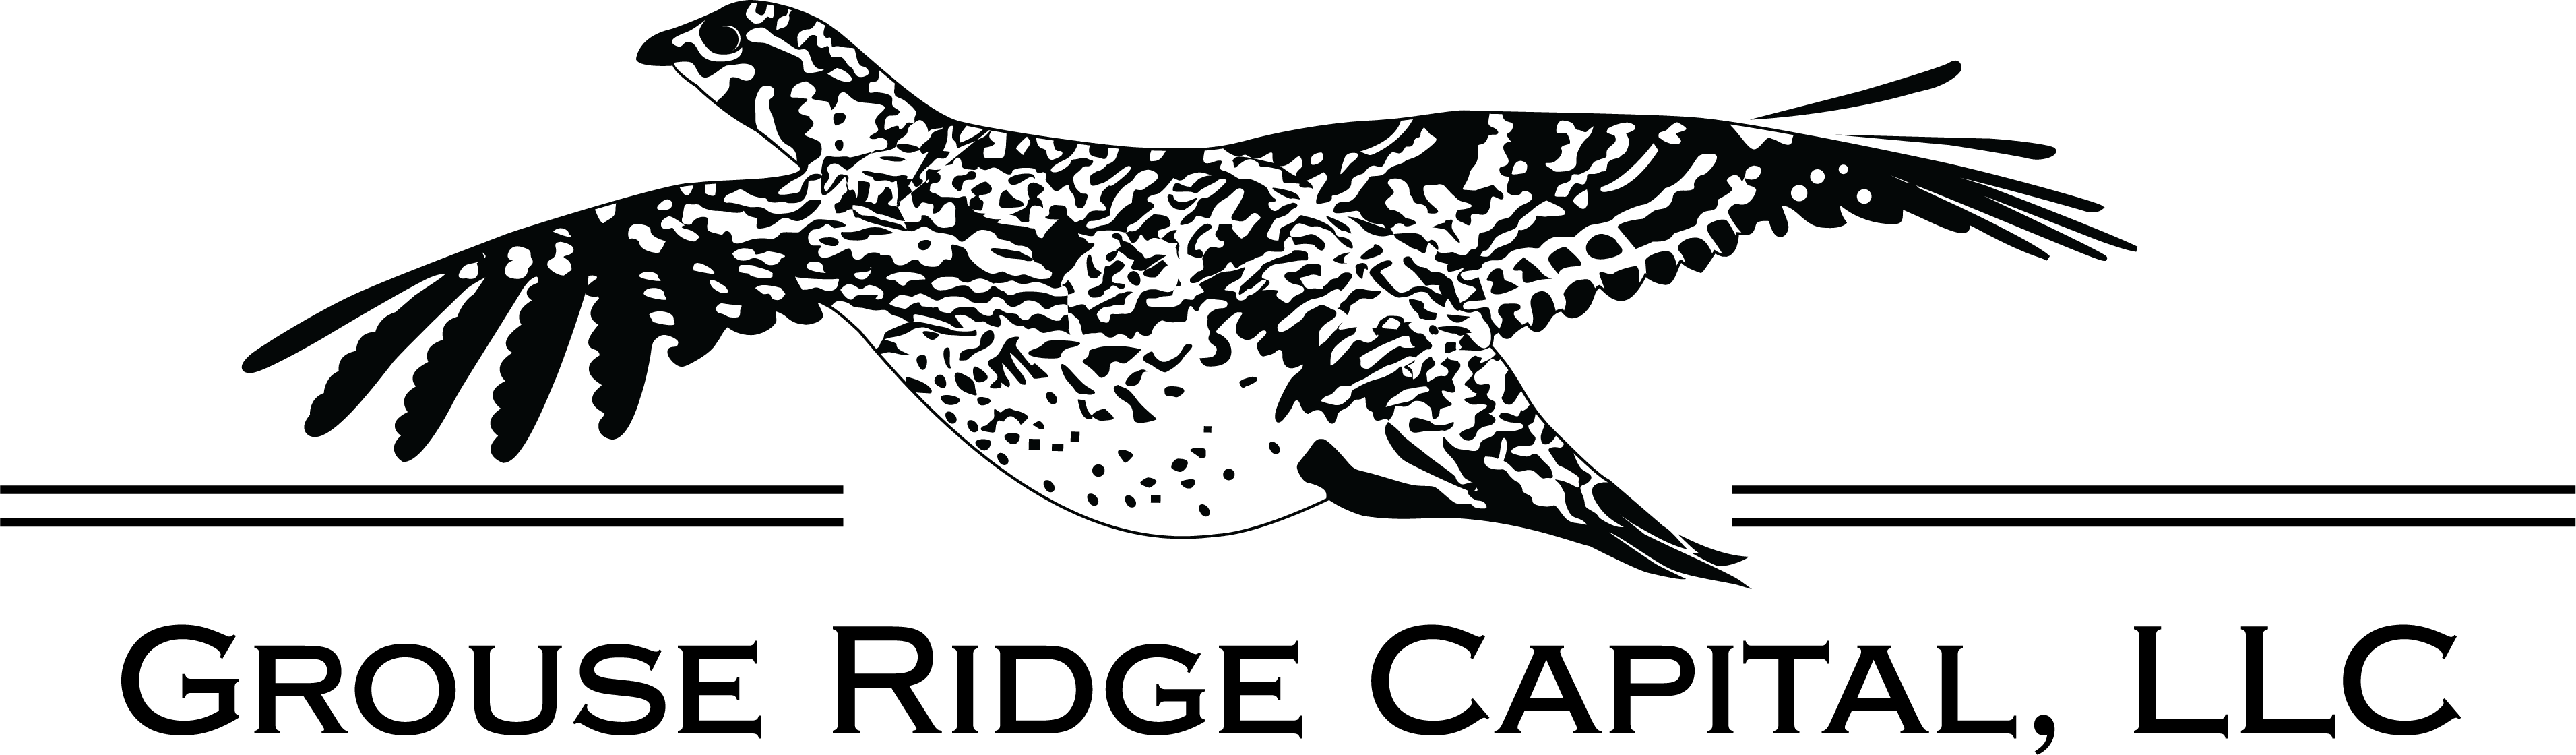 Grouse Ridge Logo - Lrg